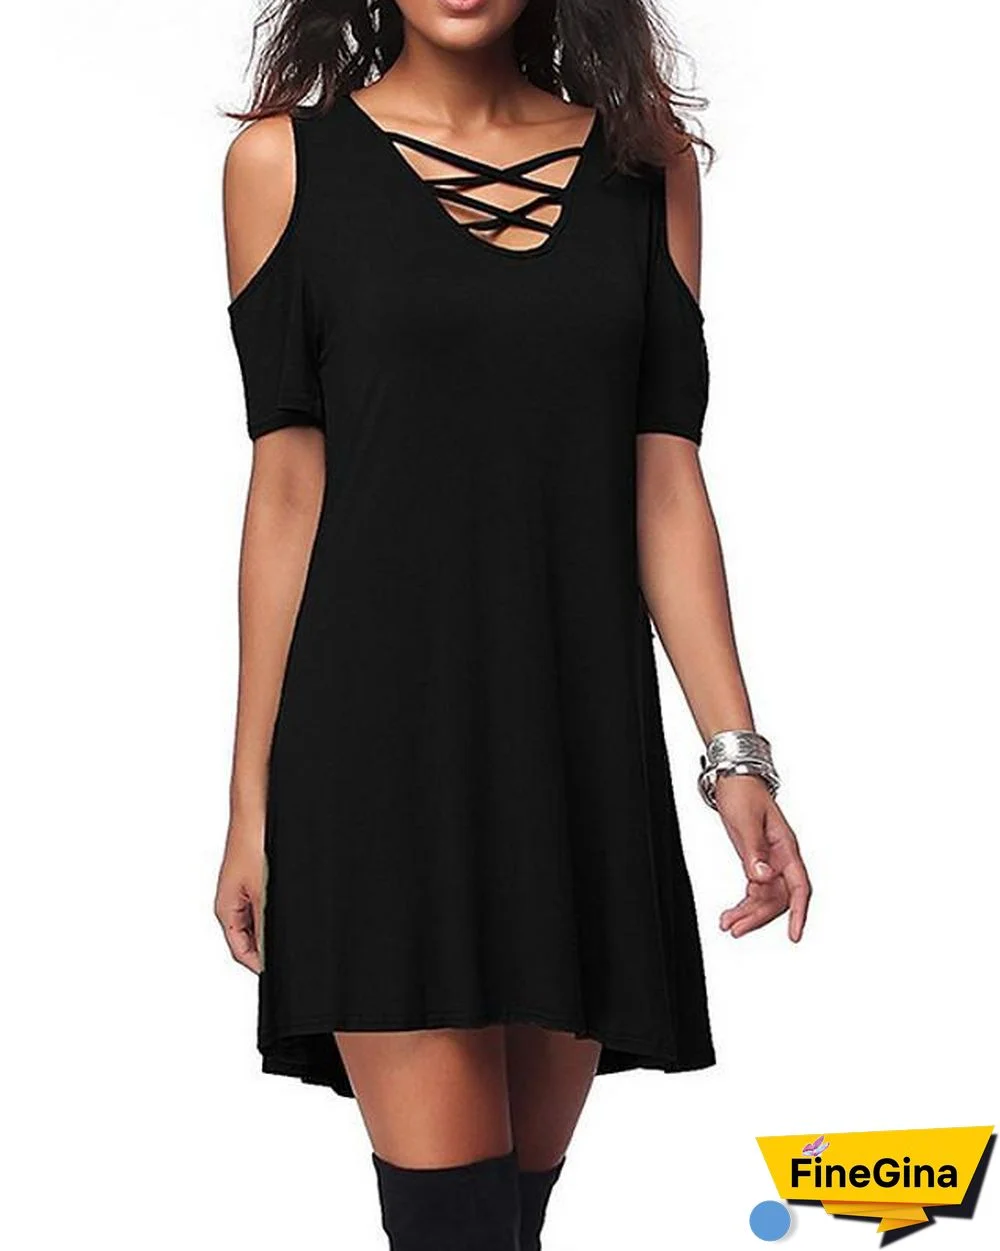 Women's Plus Size Blouse Shirt Solid Colored Plain Cut Out Fashion Hollow V Neck Tops Basic Top Black-815